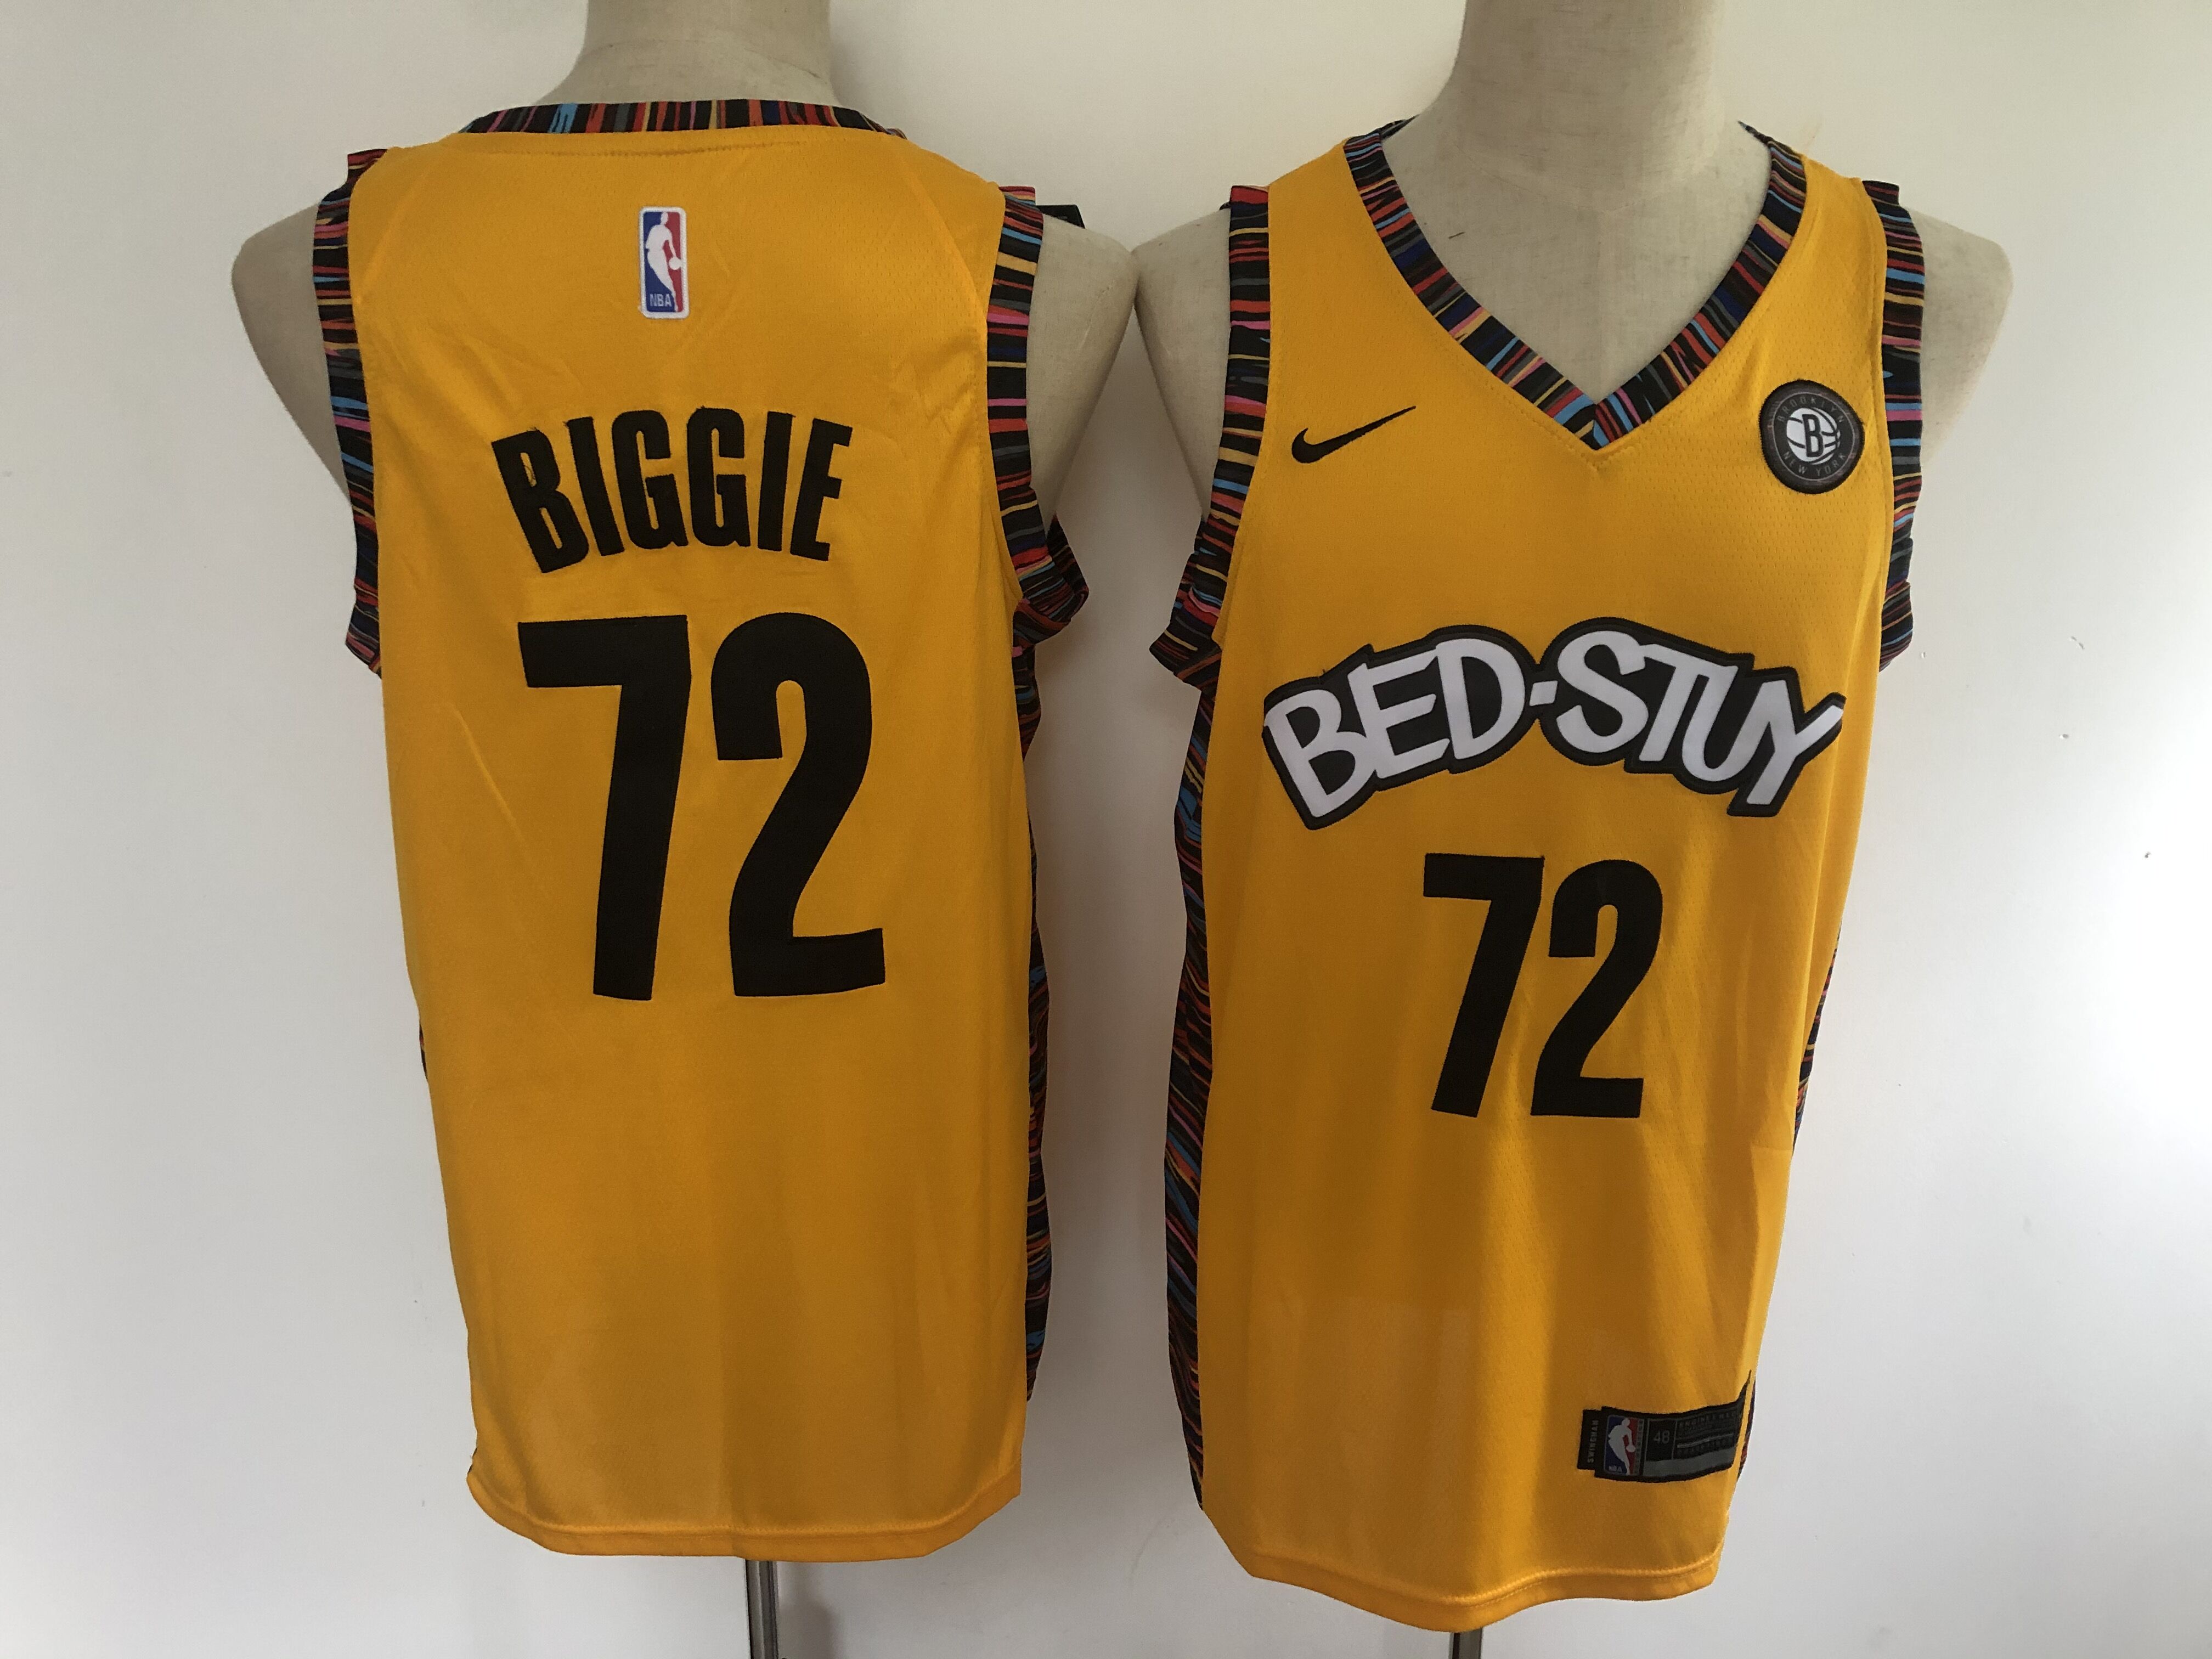 2020 Men Brooklyn Nets 72 Biggie yellow Nike Game NBA Jerseys